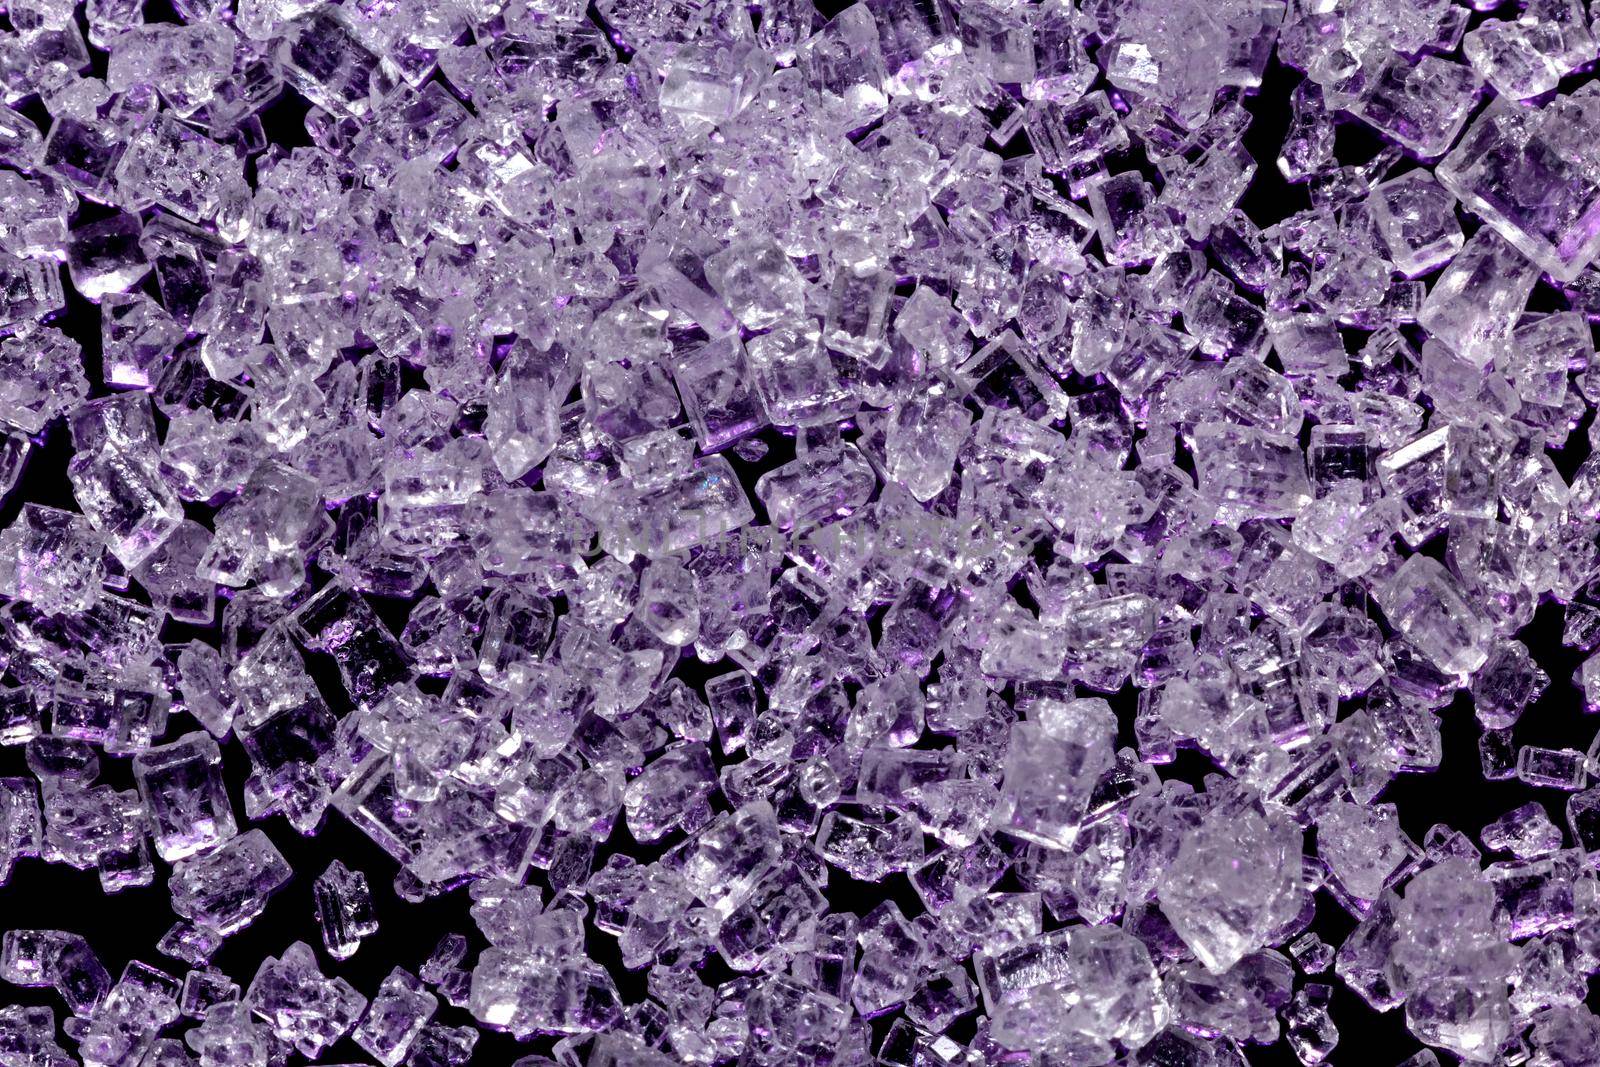 White sugar crystals on a dark violet background by clusterx